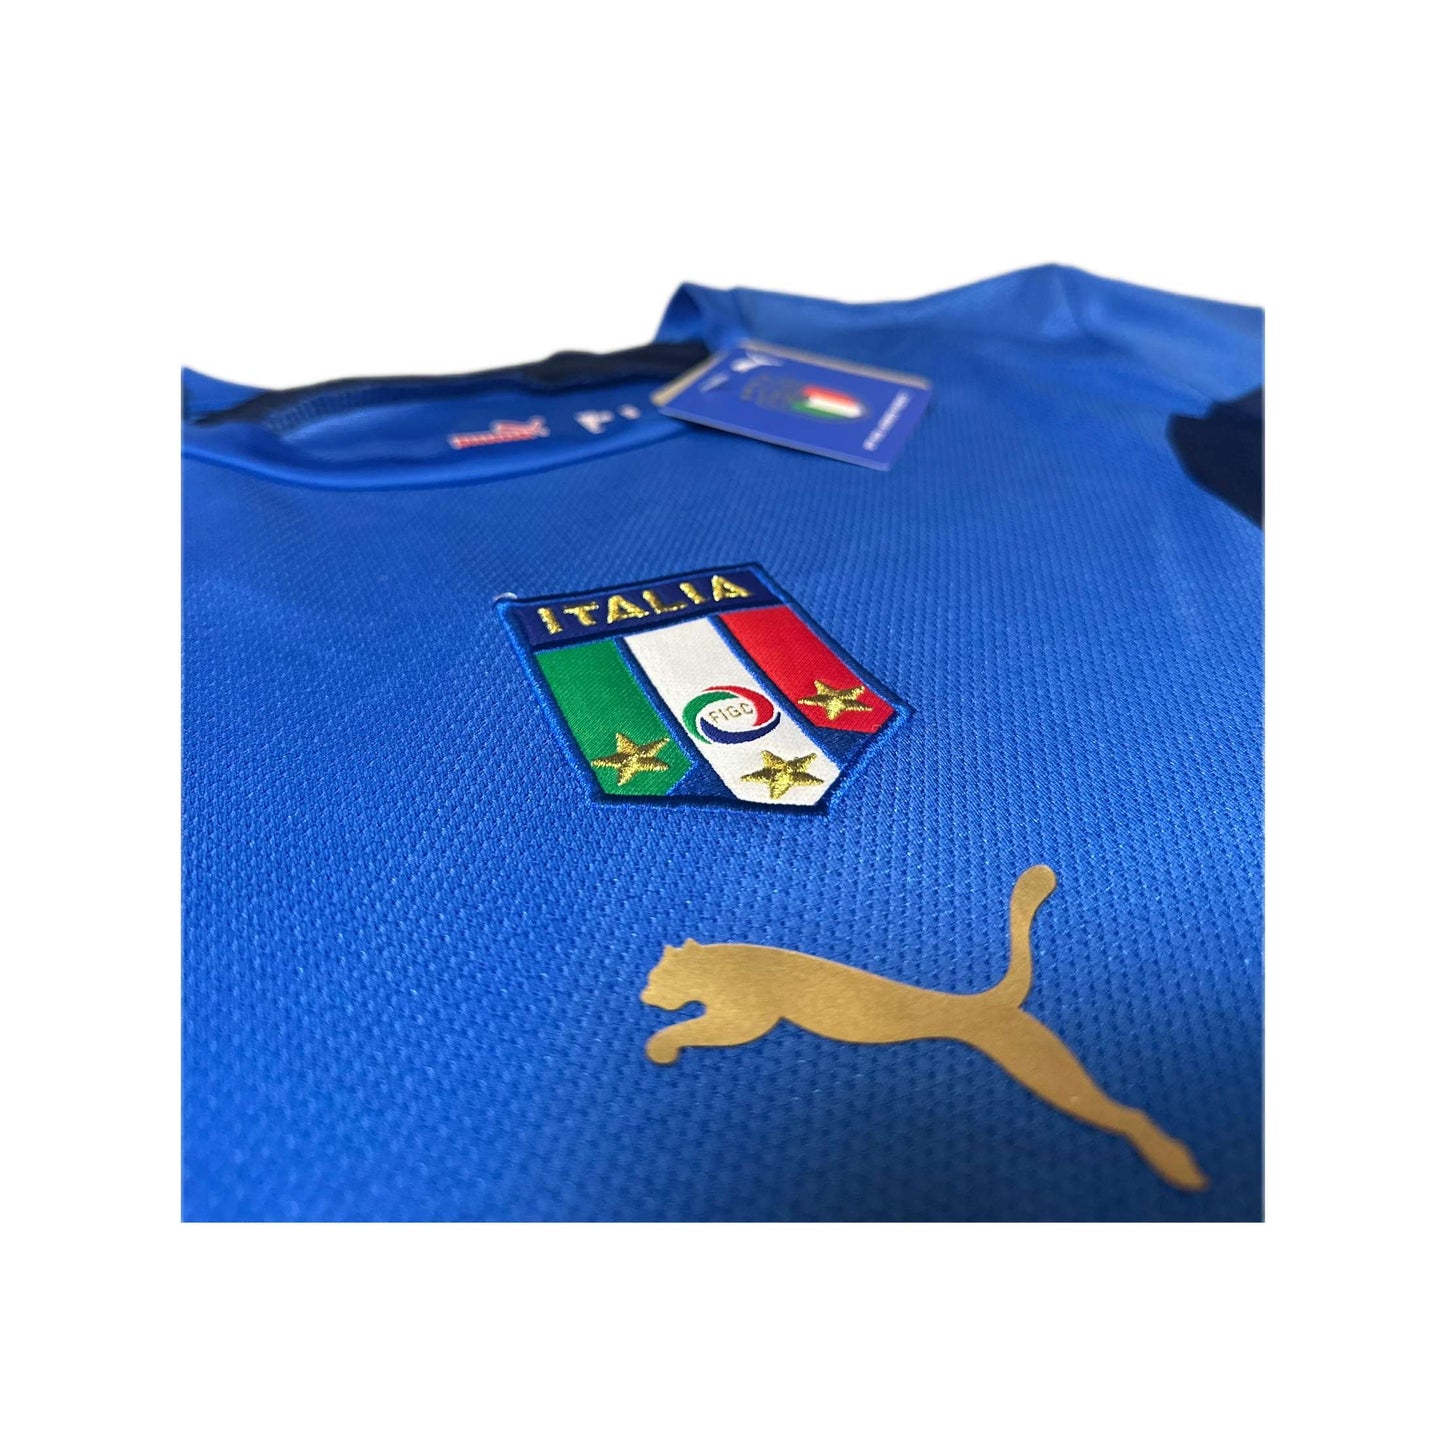 Italy 2006 home shirt